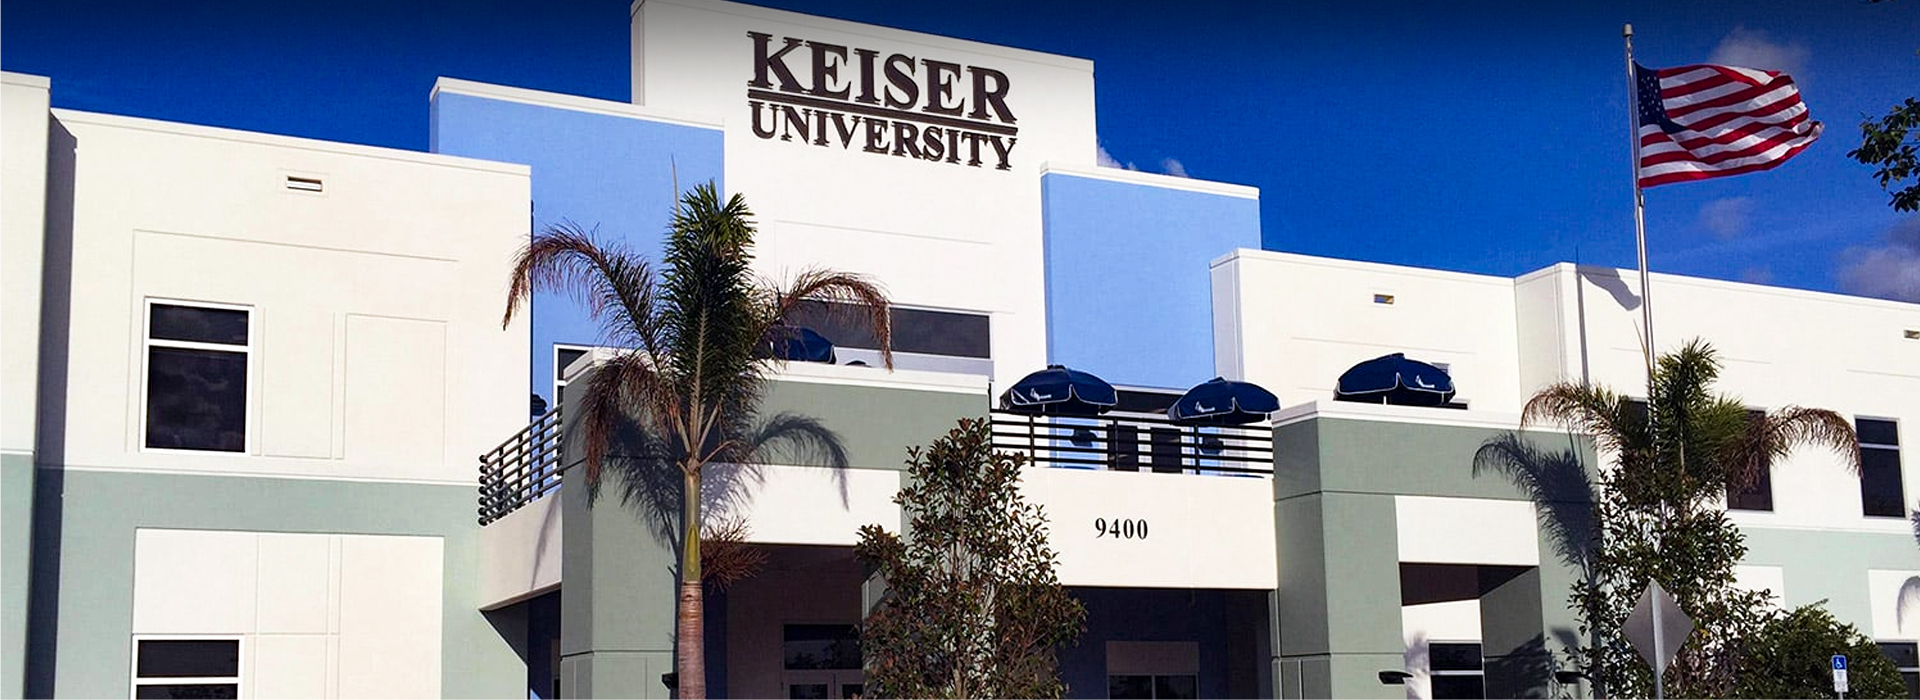 Keiser University International Credit Course Program